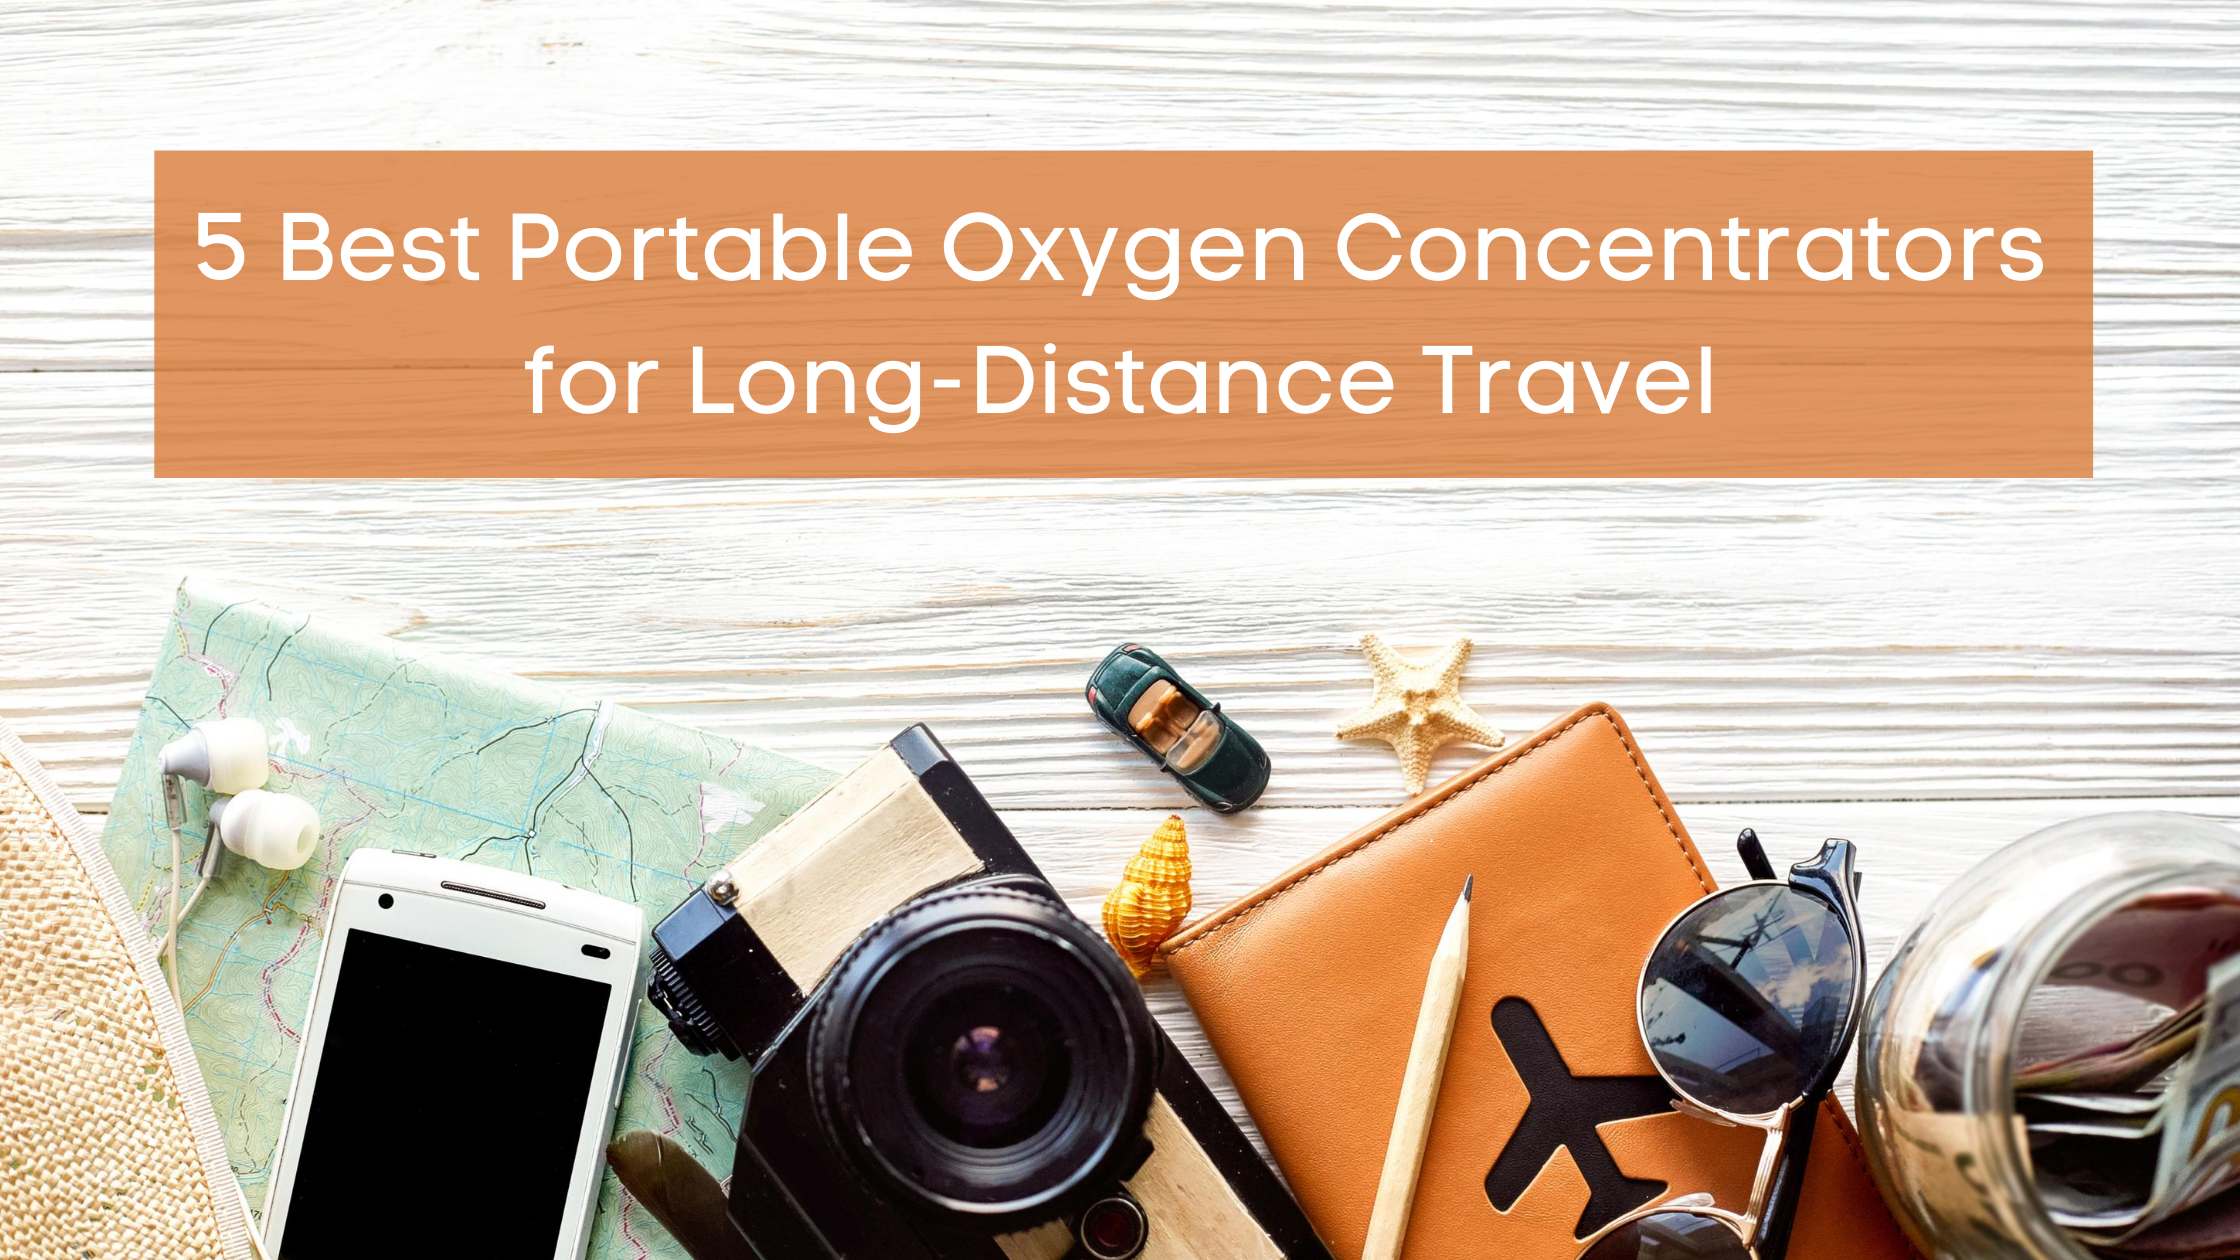 5 Best Portable Oxygen Concentrators for Long-Distance Travel